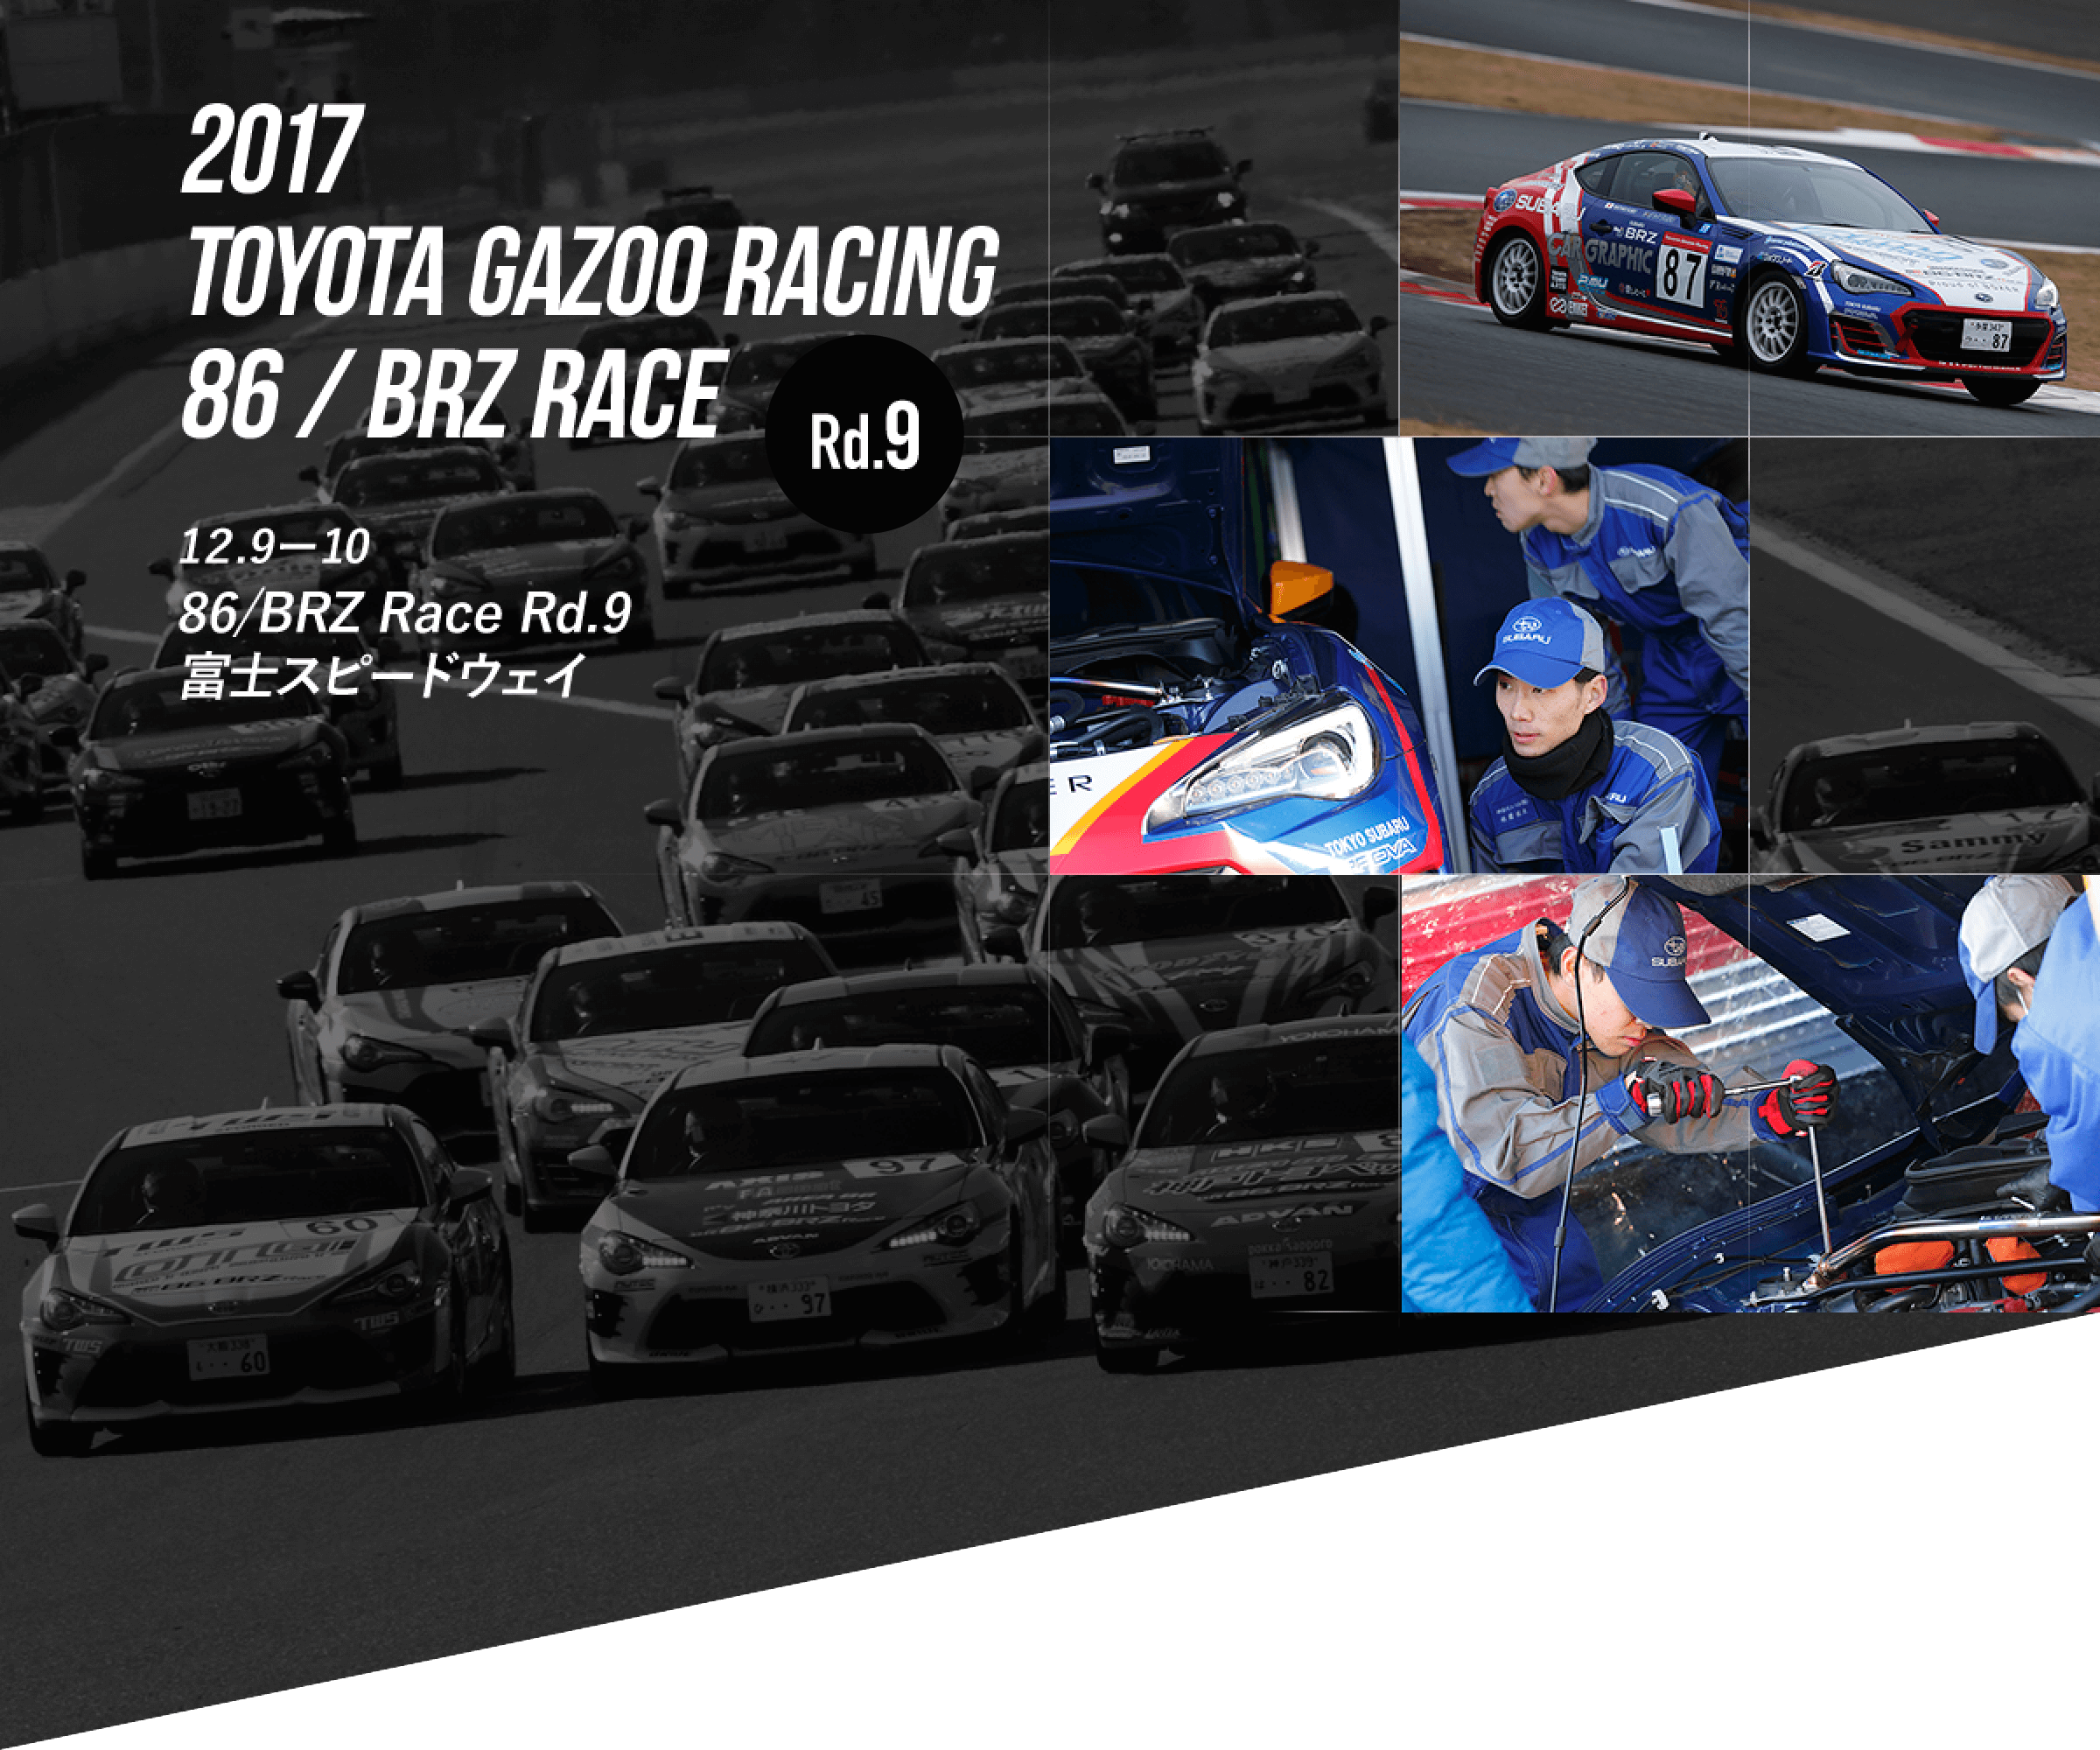 2017 TOYOTA GAZOO RACING 86/BRZ RACE Rd.9 12.9-10 86/BRZ Race Rd.9 富士スピードウェイ